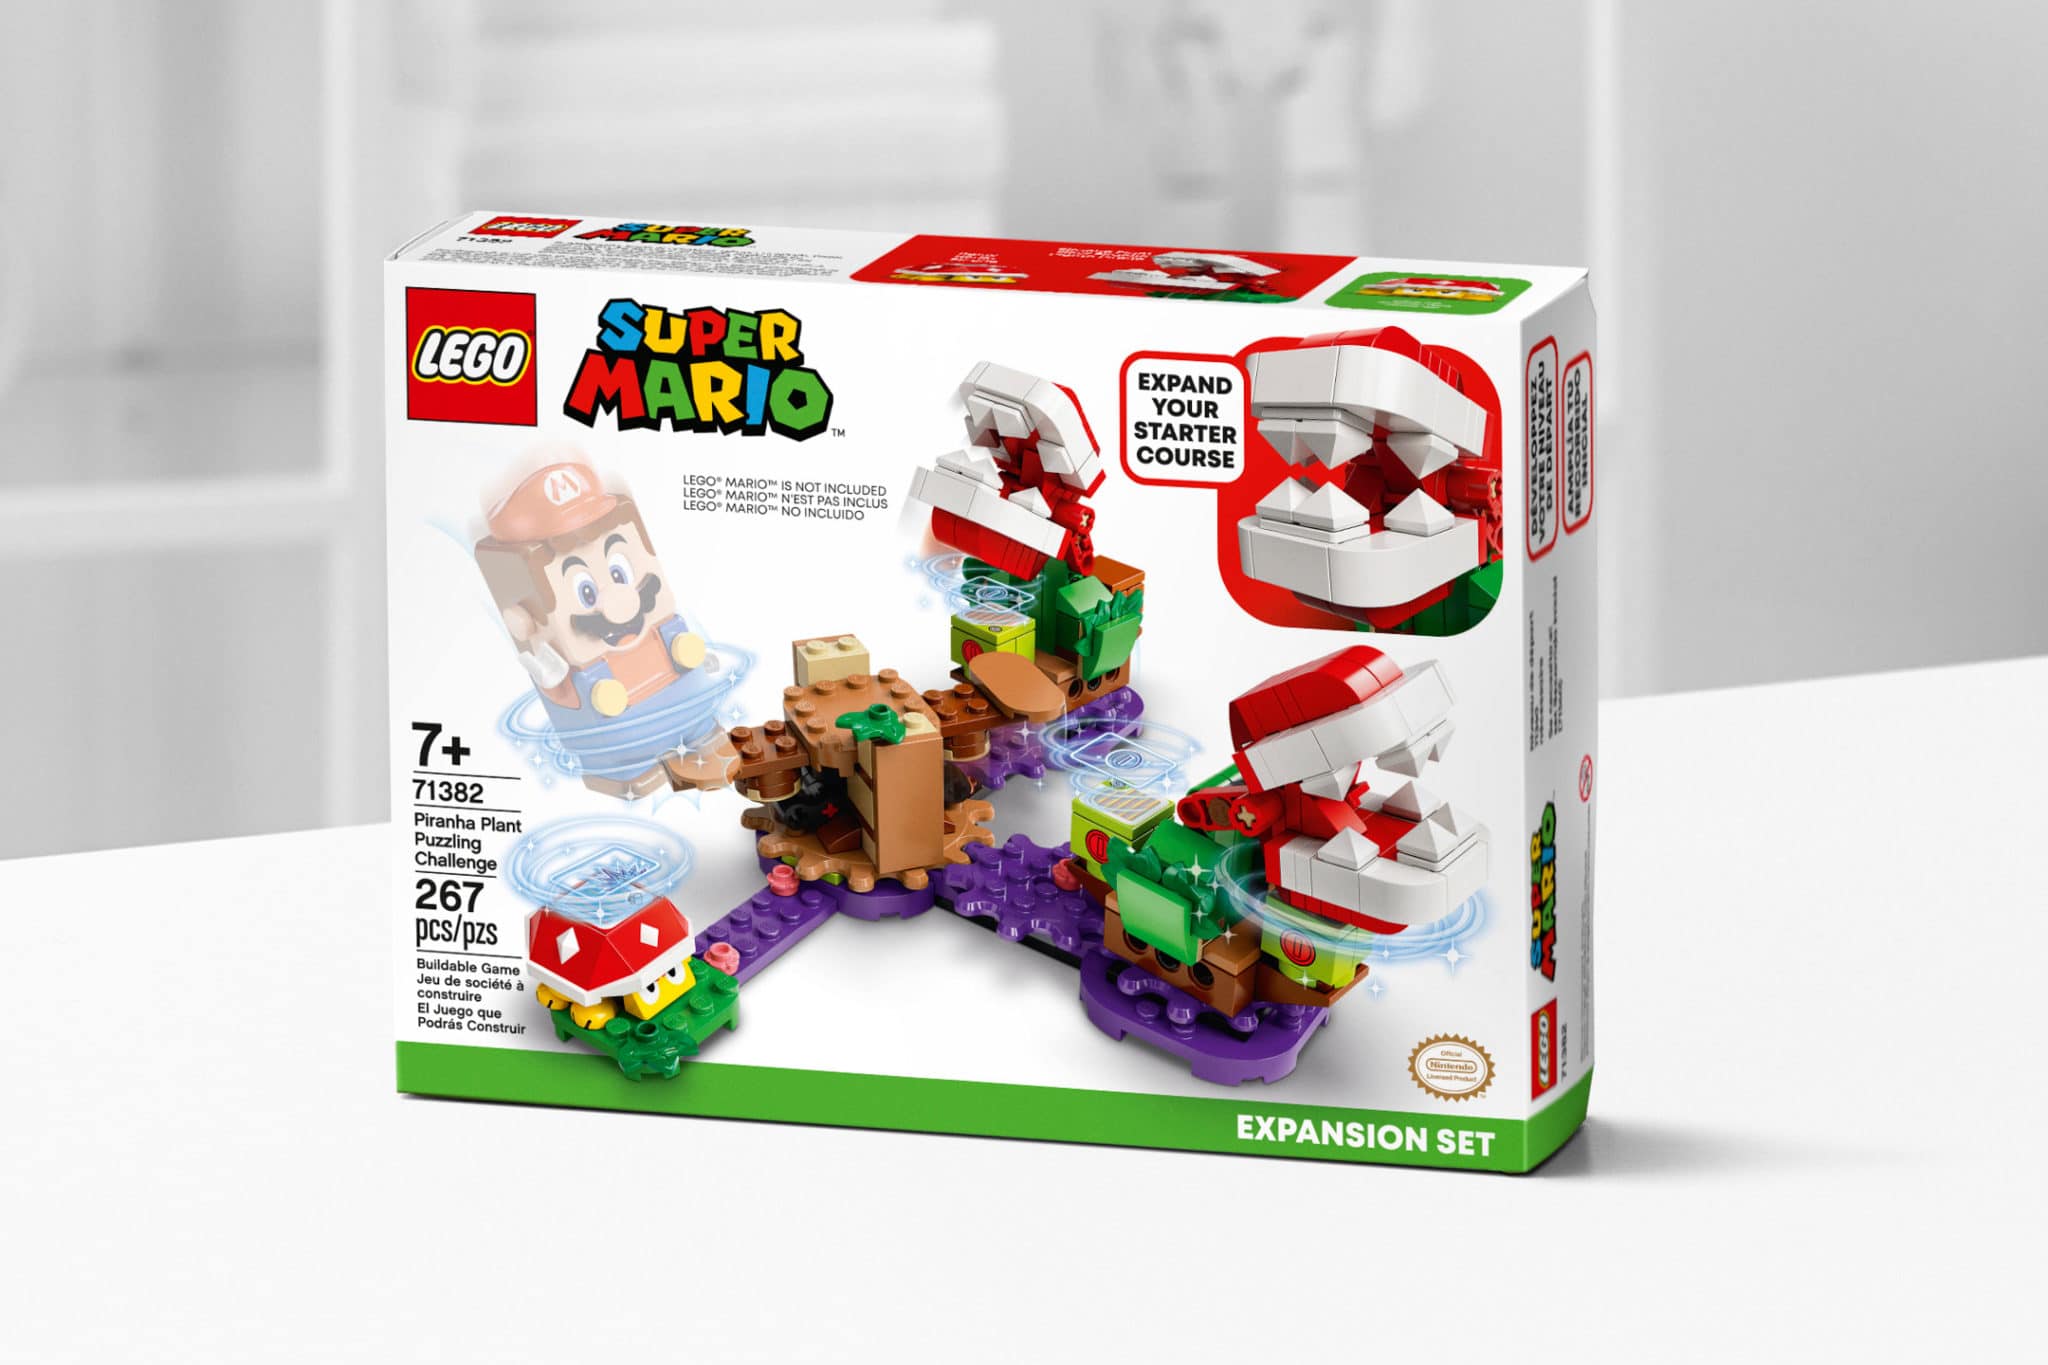 LEGO Super Mario 71382 Piranha Plant Puzzling Challenge 5